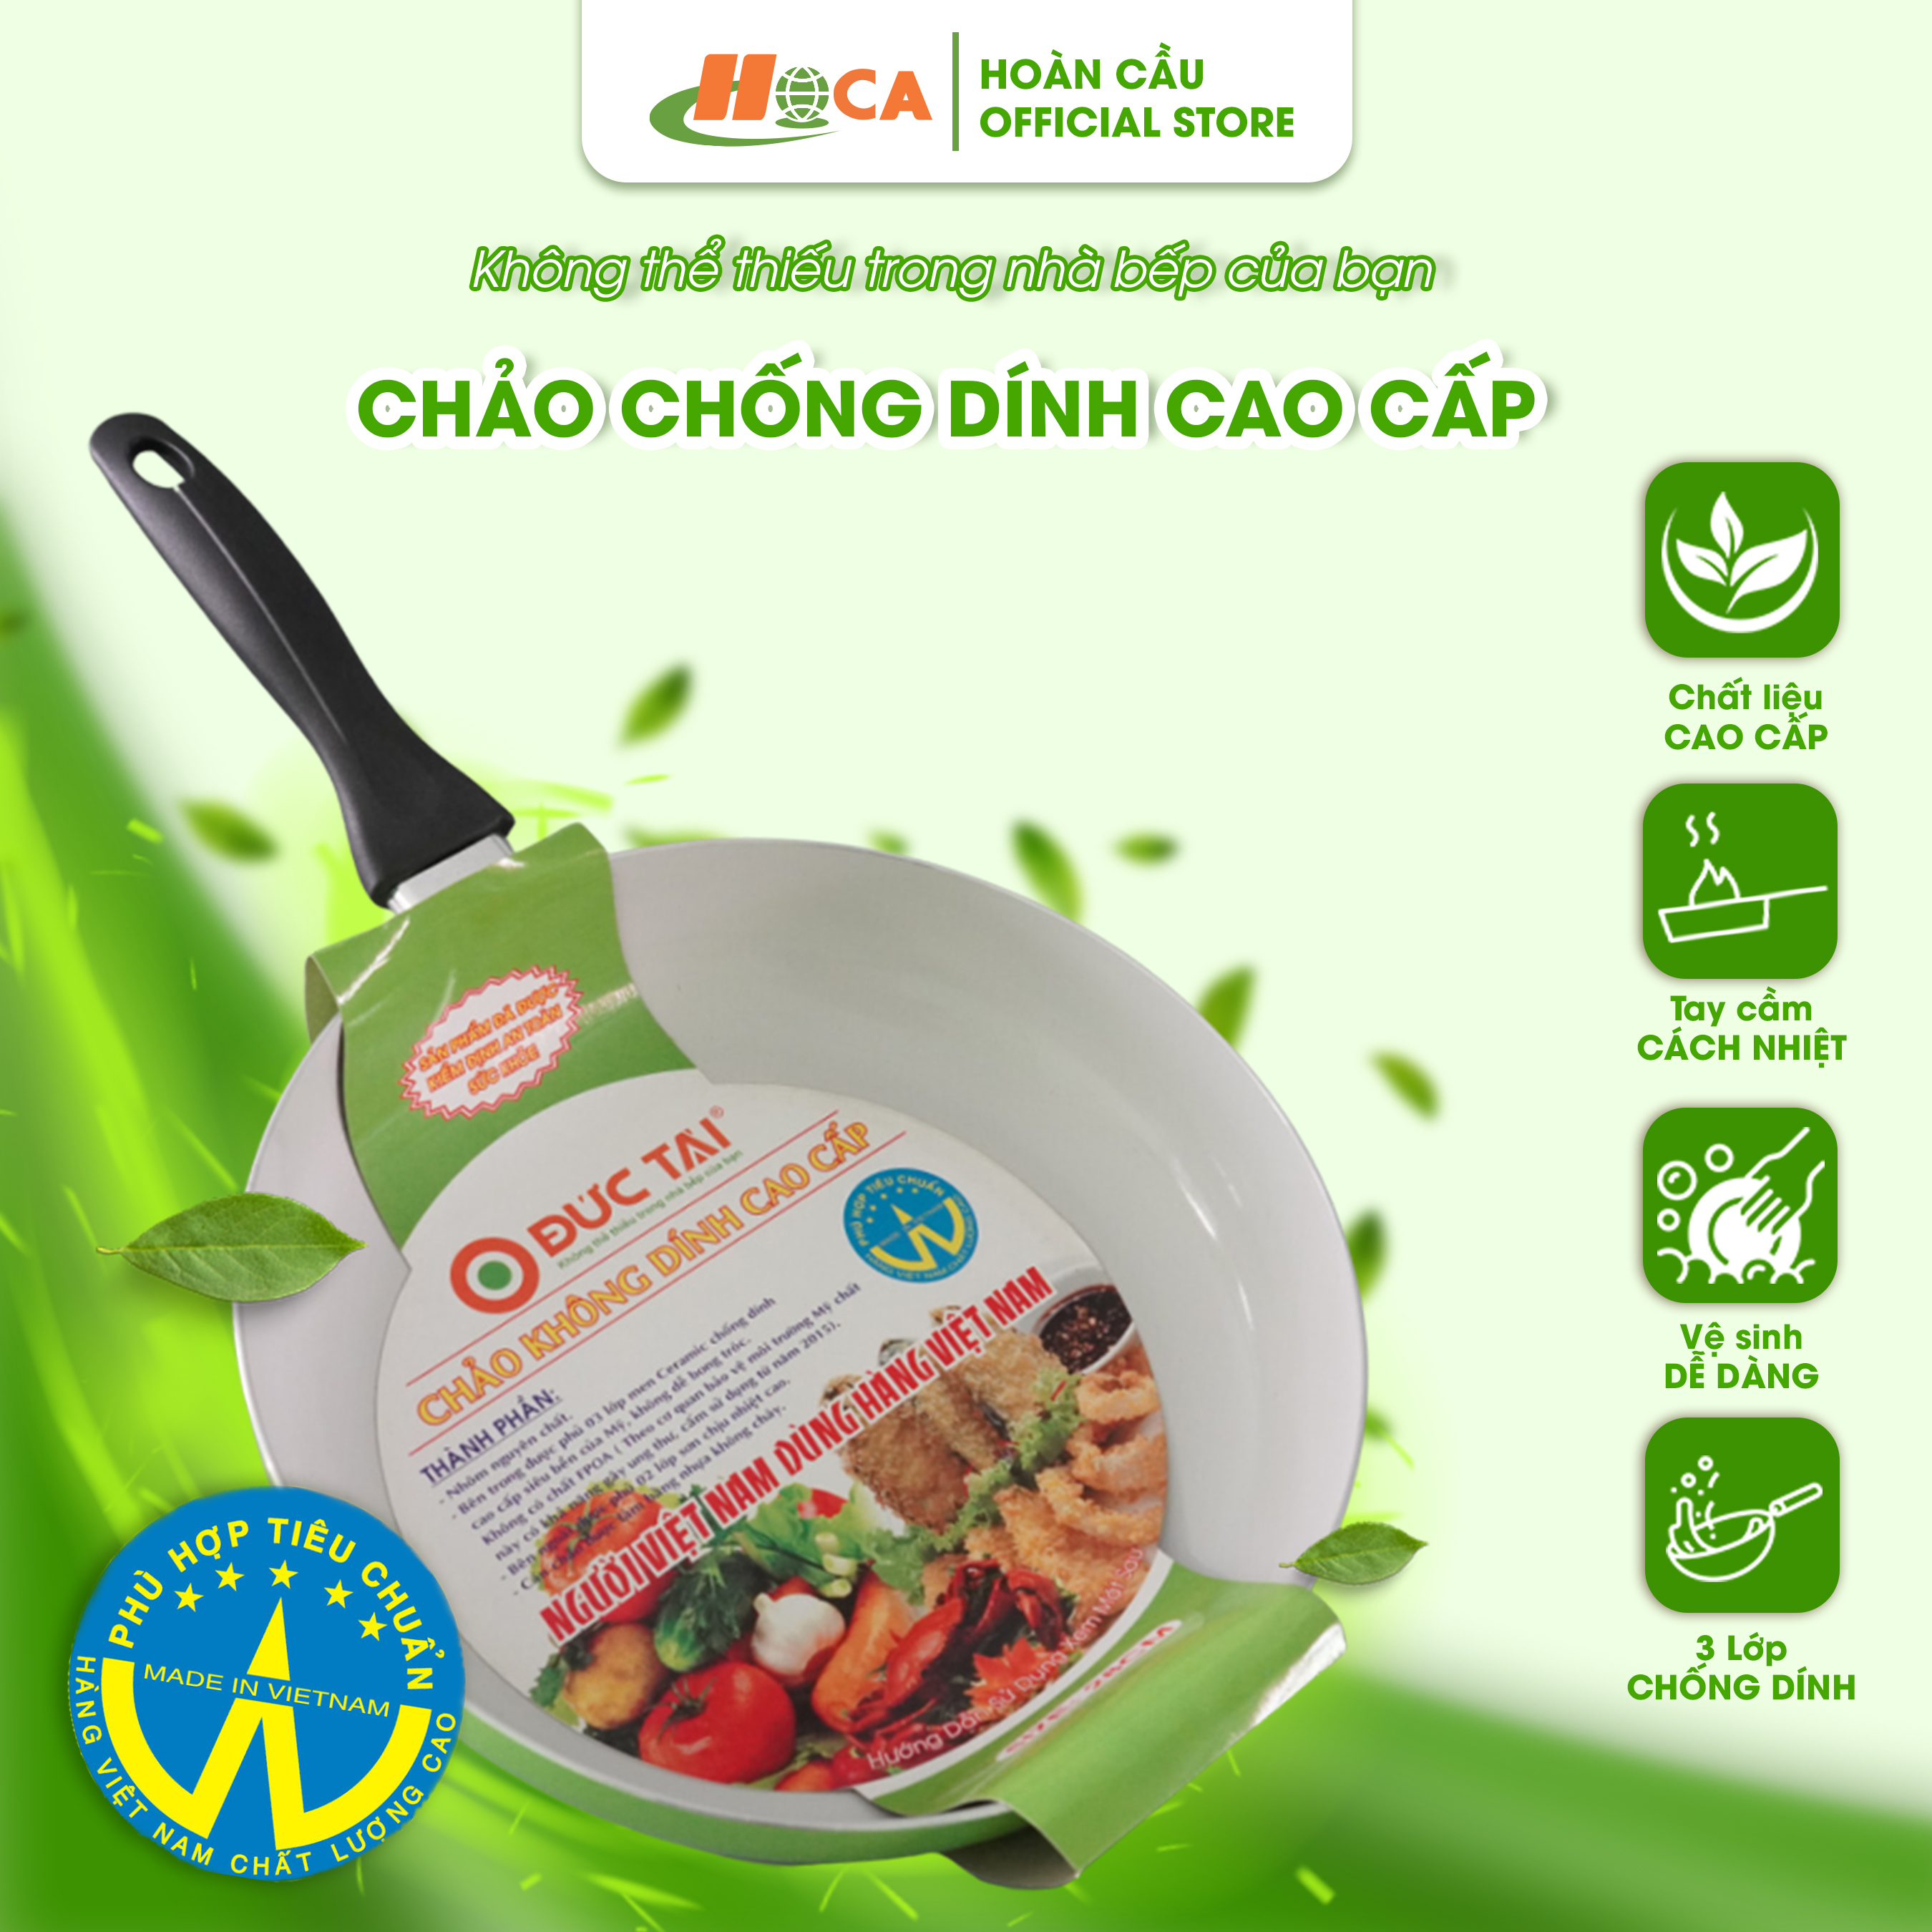 chao-chong-dinh-HOCA-cao-cap